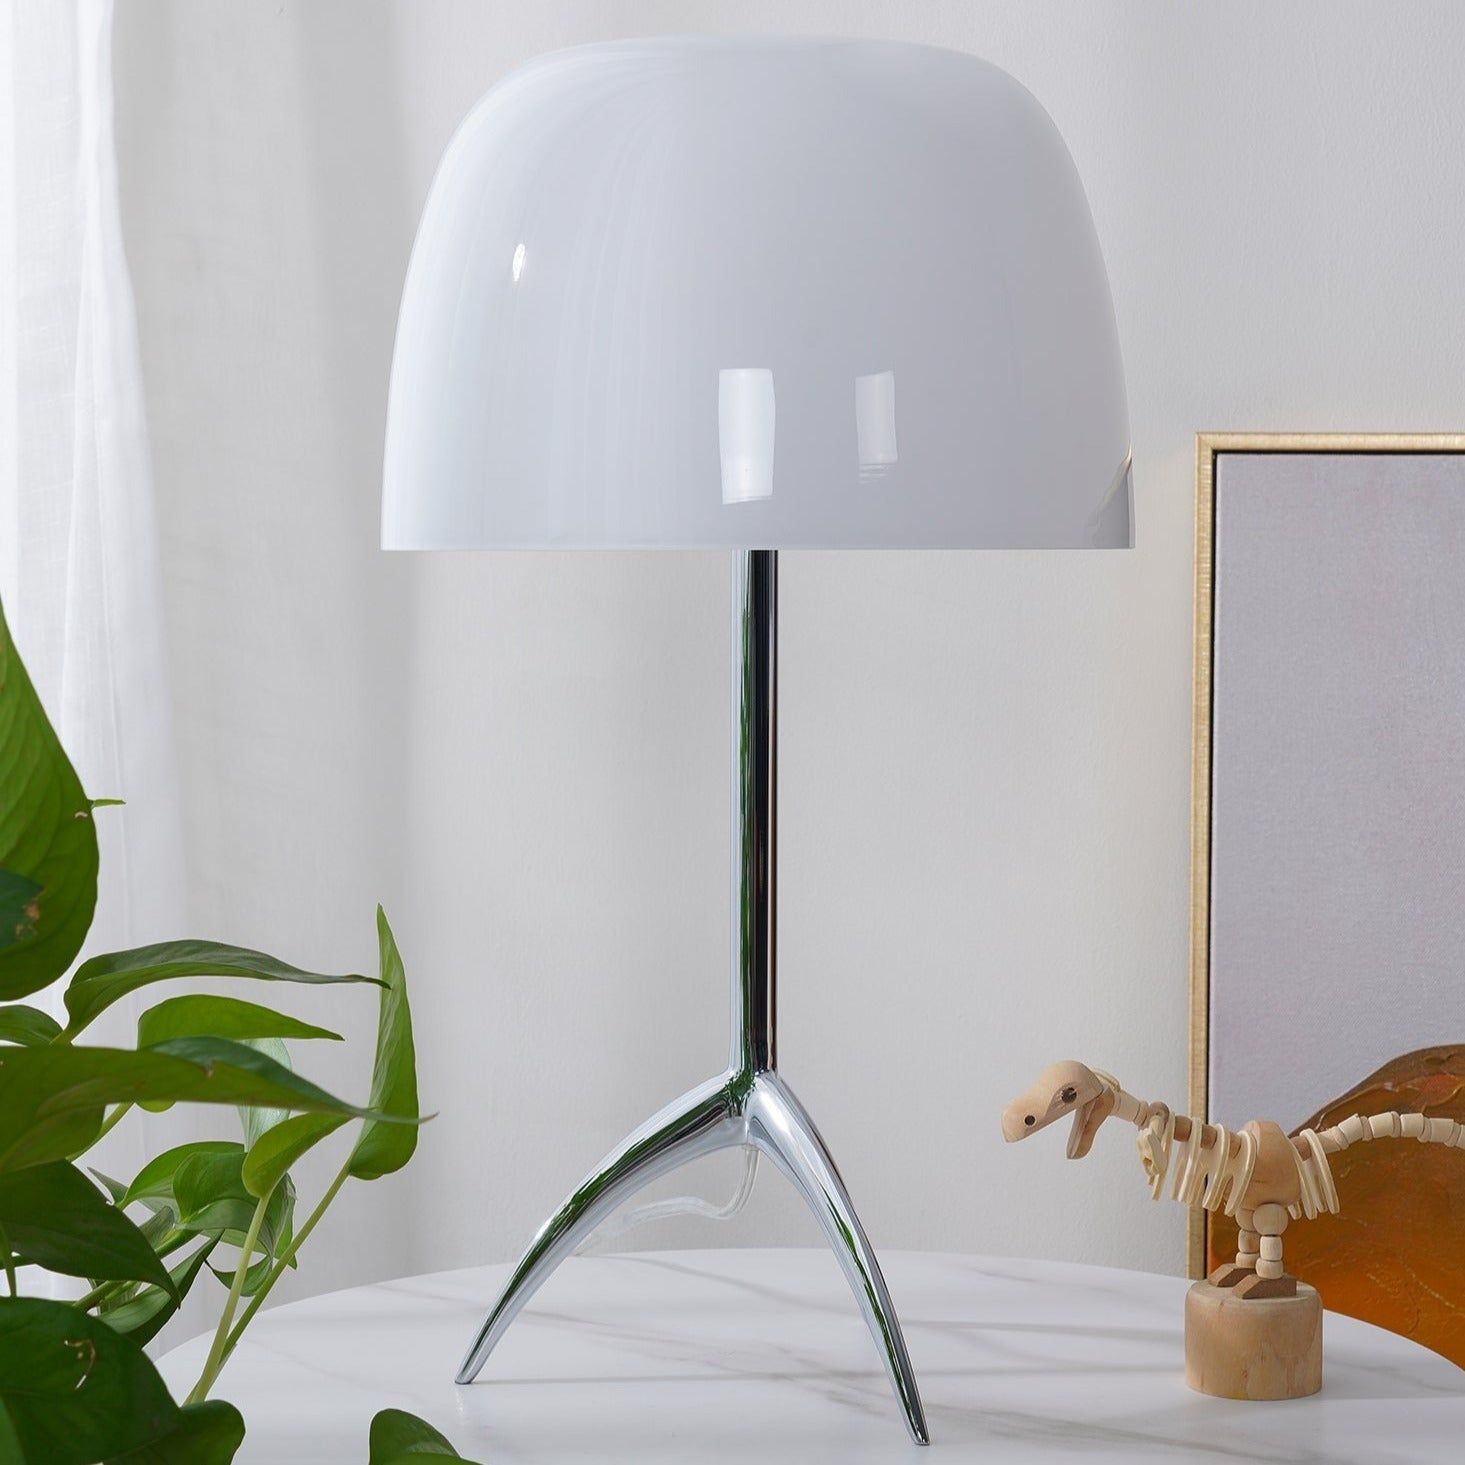 Bedside Lamp Designs : Modern Innovative Bedside Lamp Designs Setting Trends in Home Decor